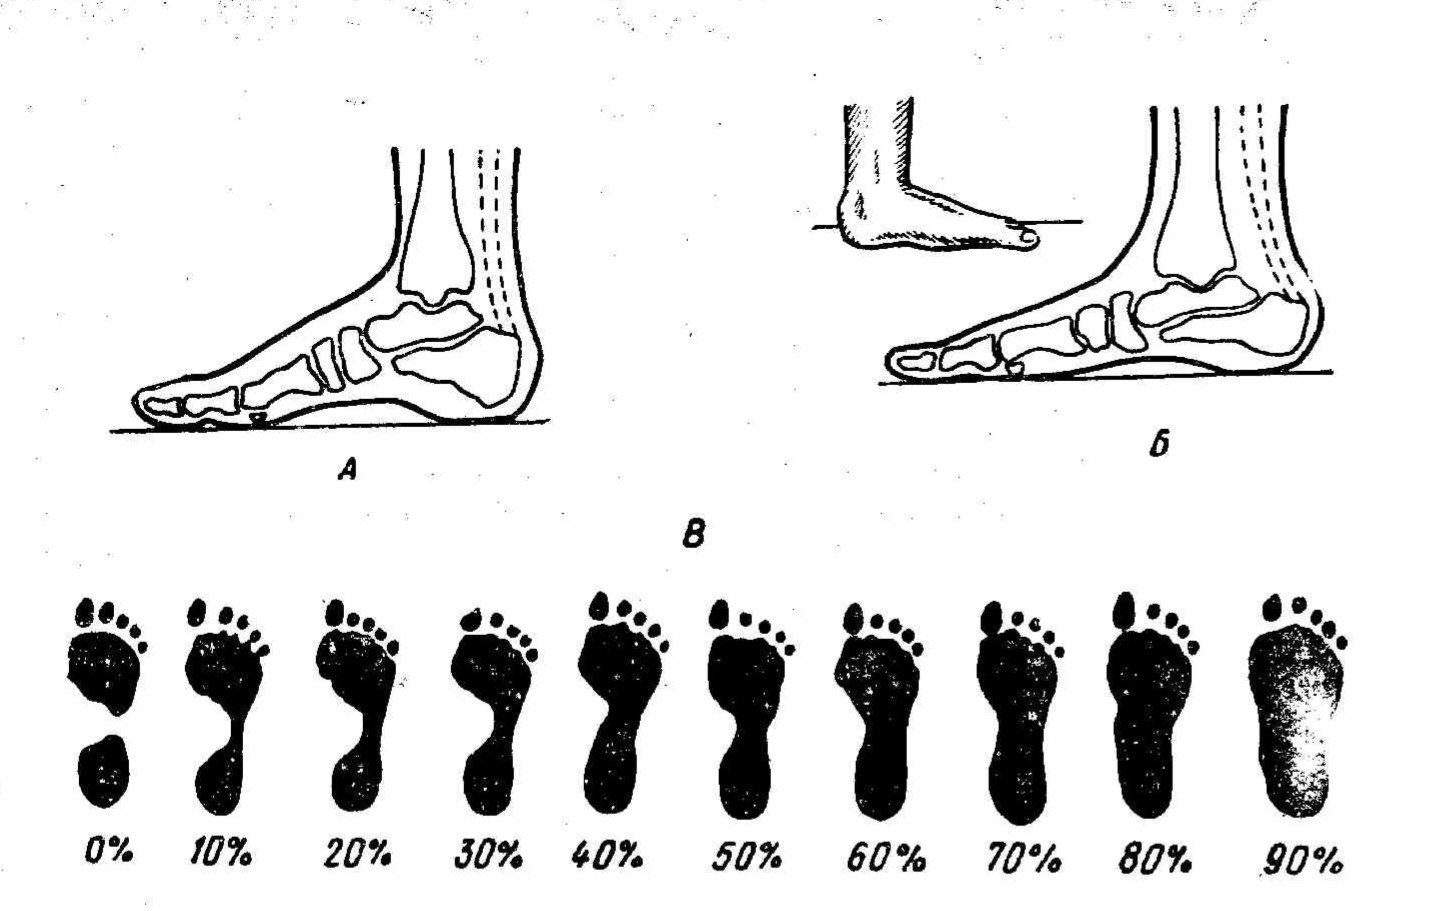 Как выглядит стопа при плоскостопии 3 степени фото ног